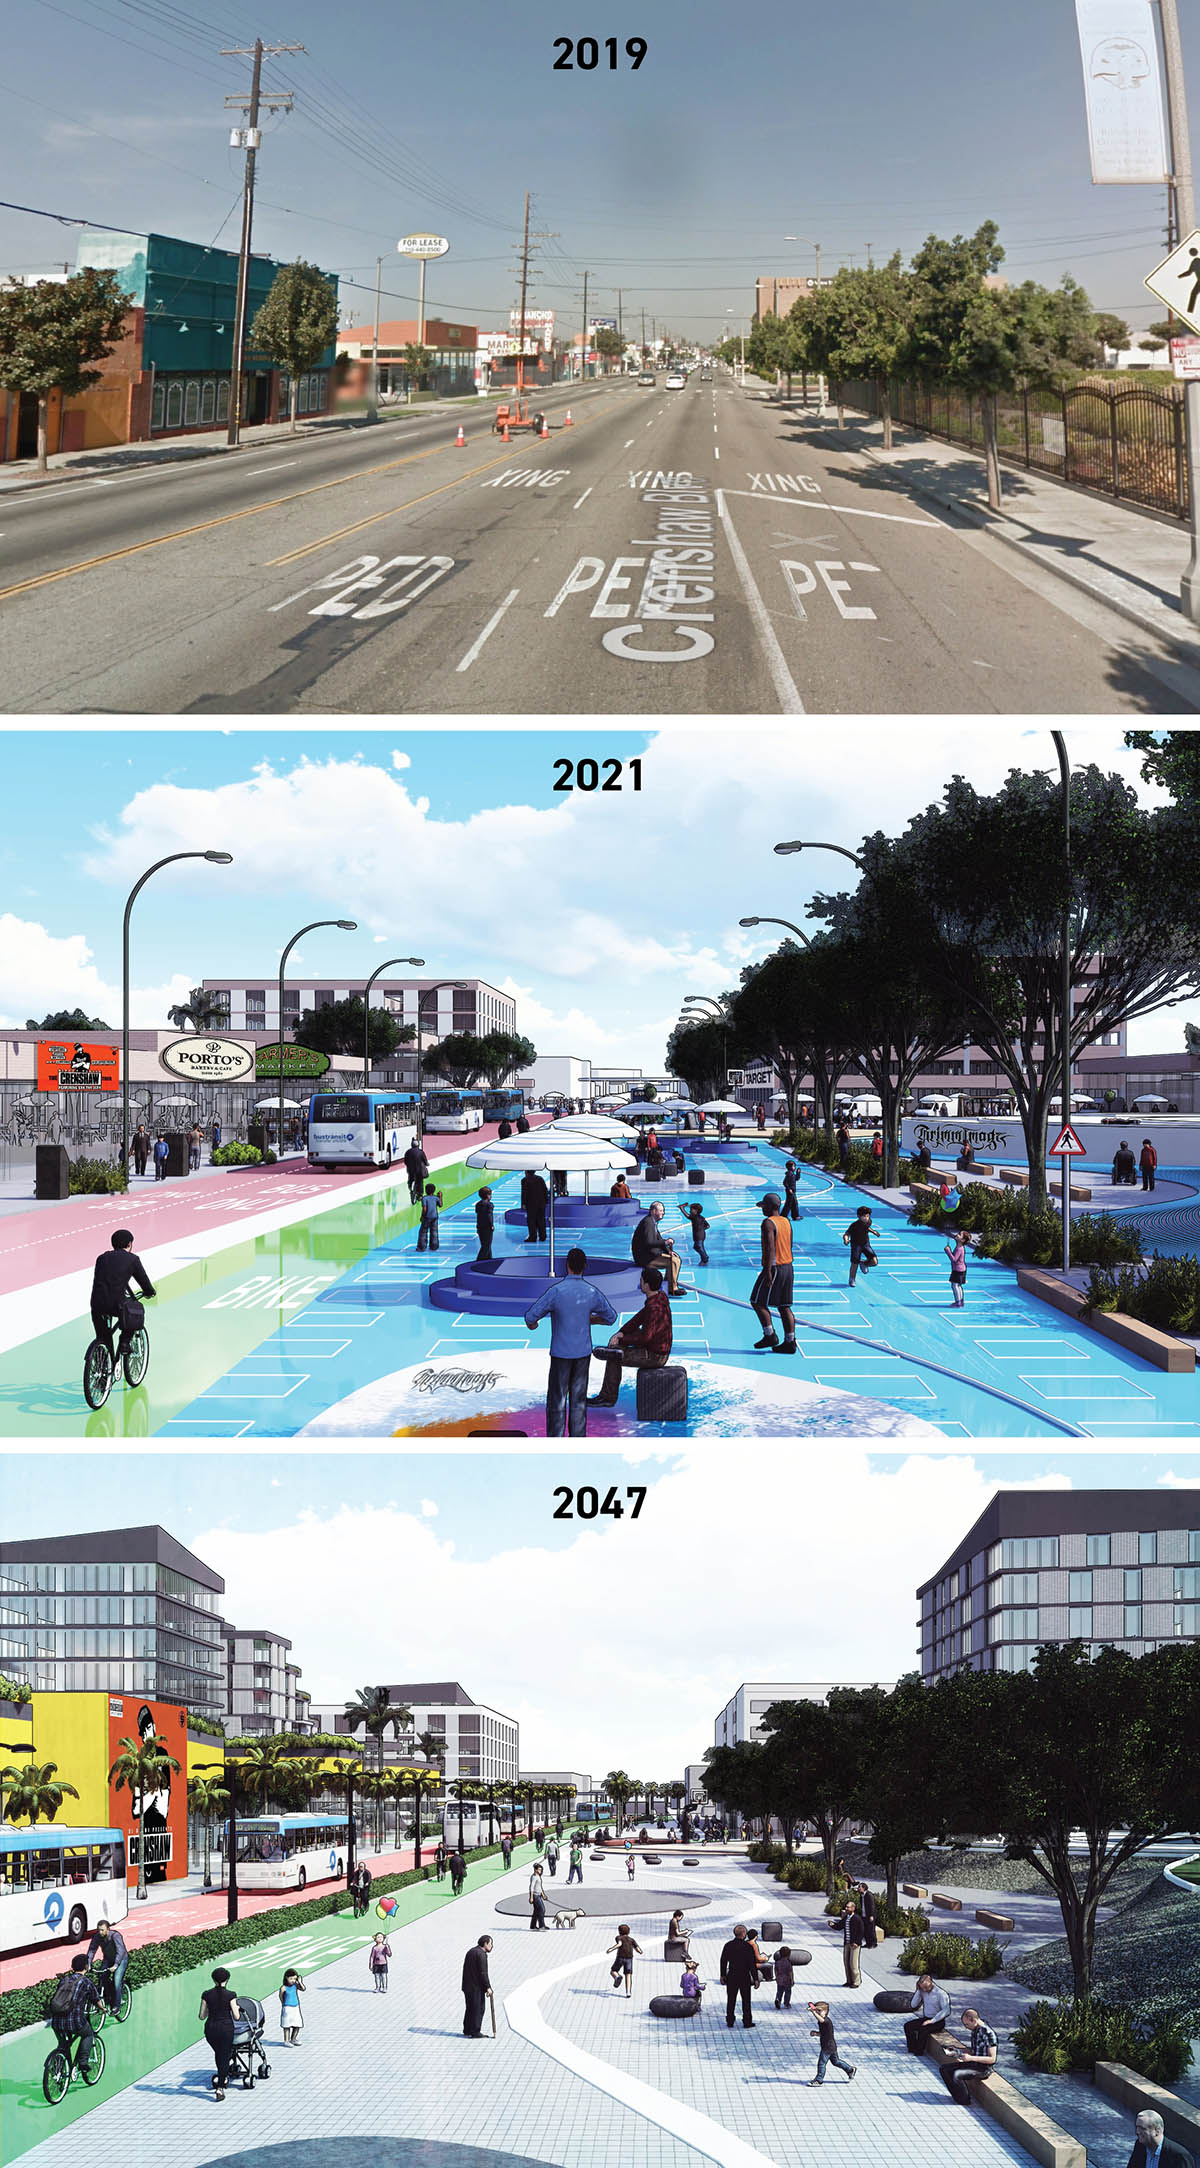 three street renderings showing 2019, 2021, and 2047